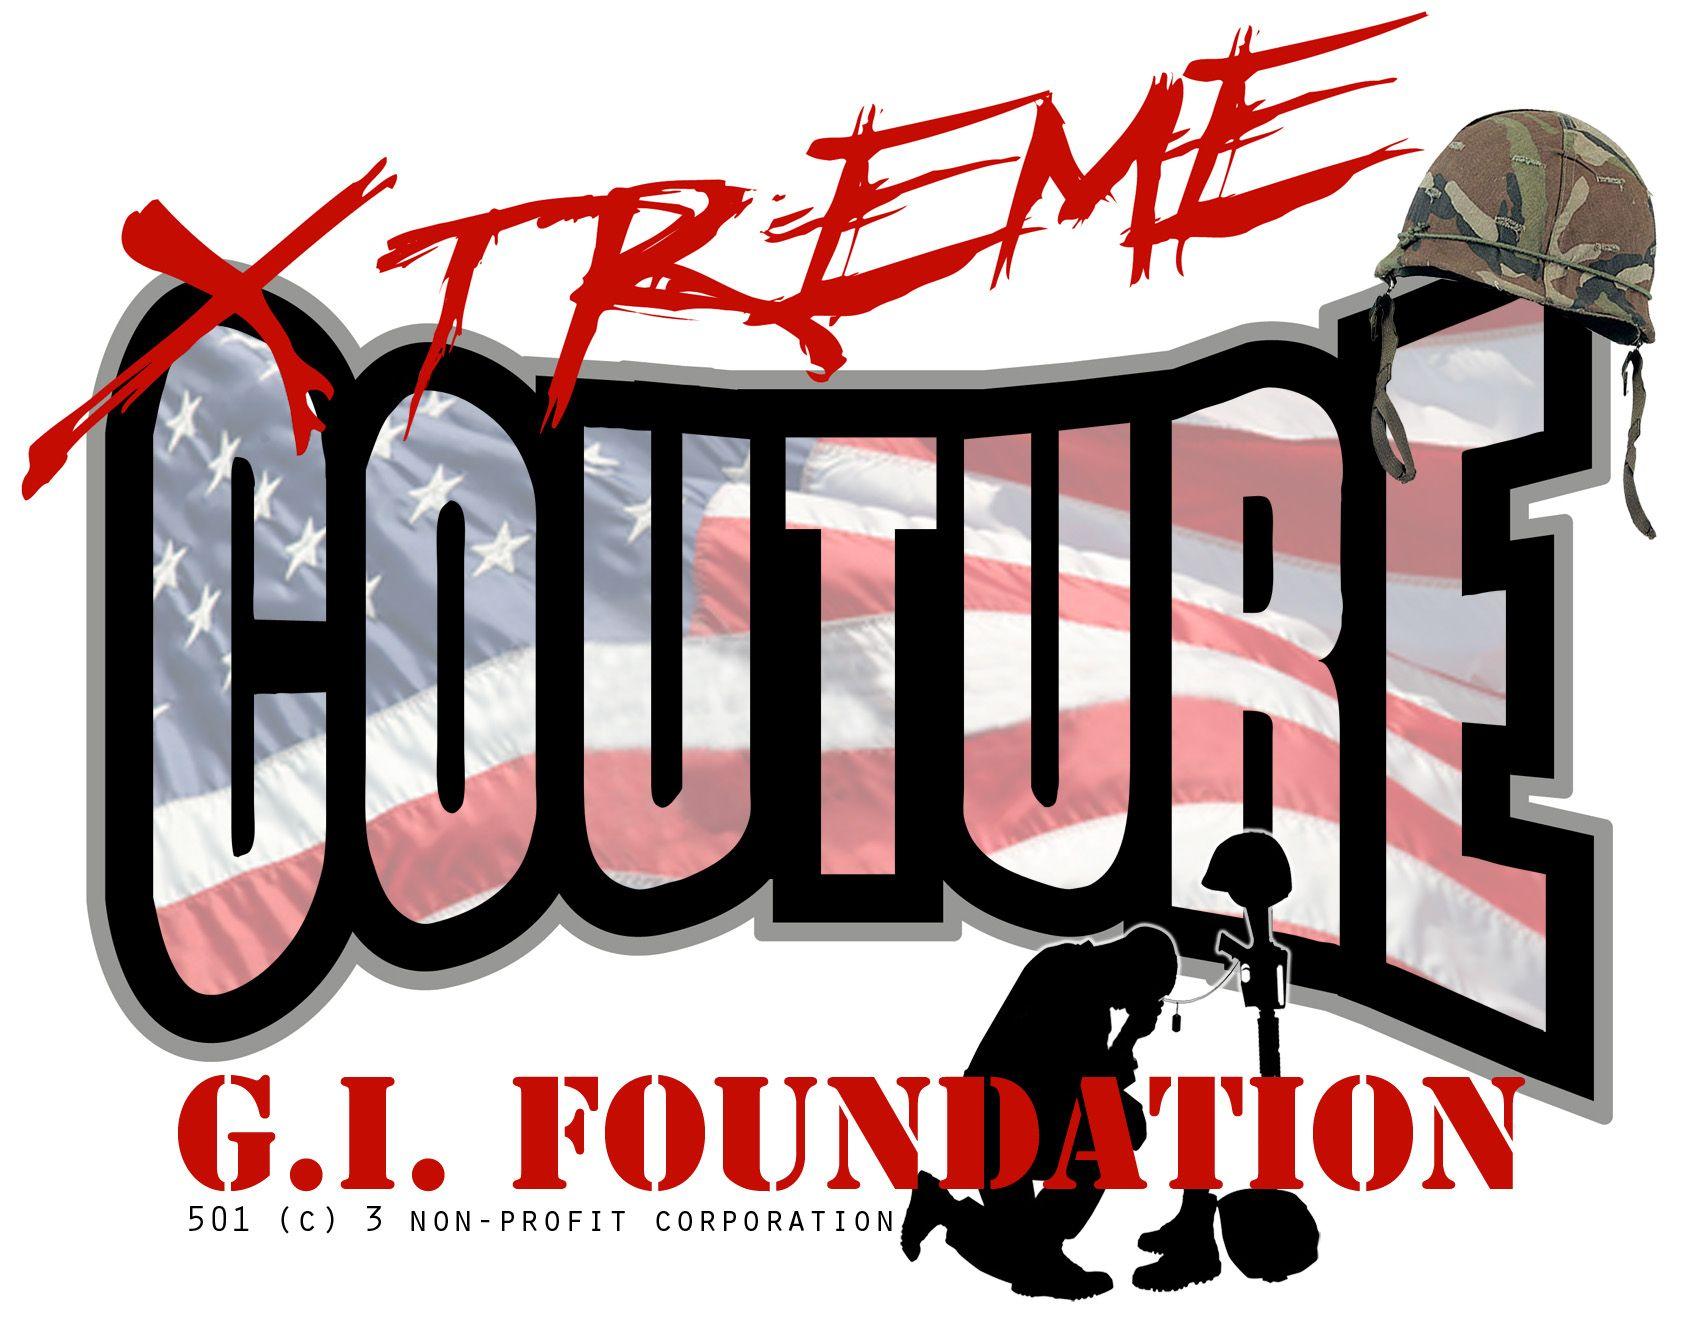 Xtreme Couture Logo - Xtreme Couture G.I. Foundation (c) 3 Non Profit Corporation